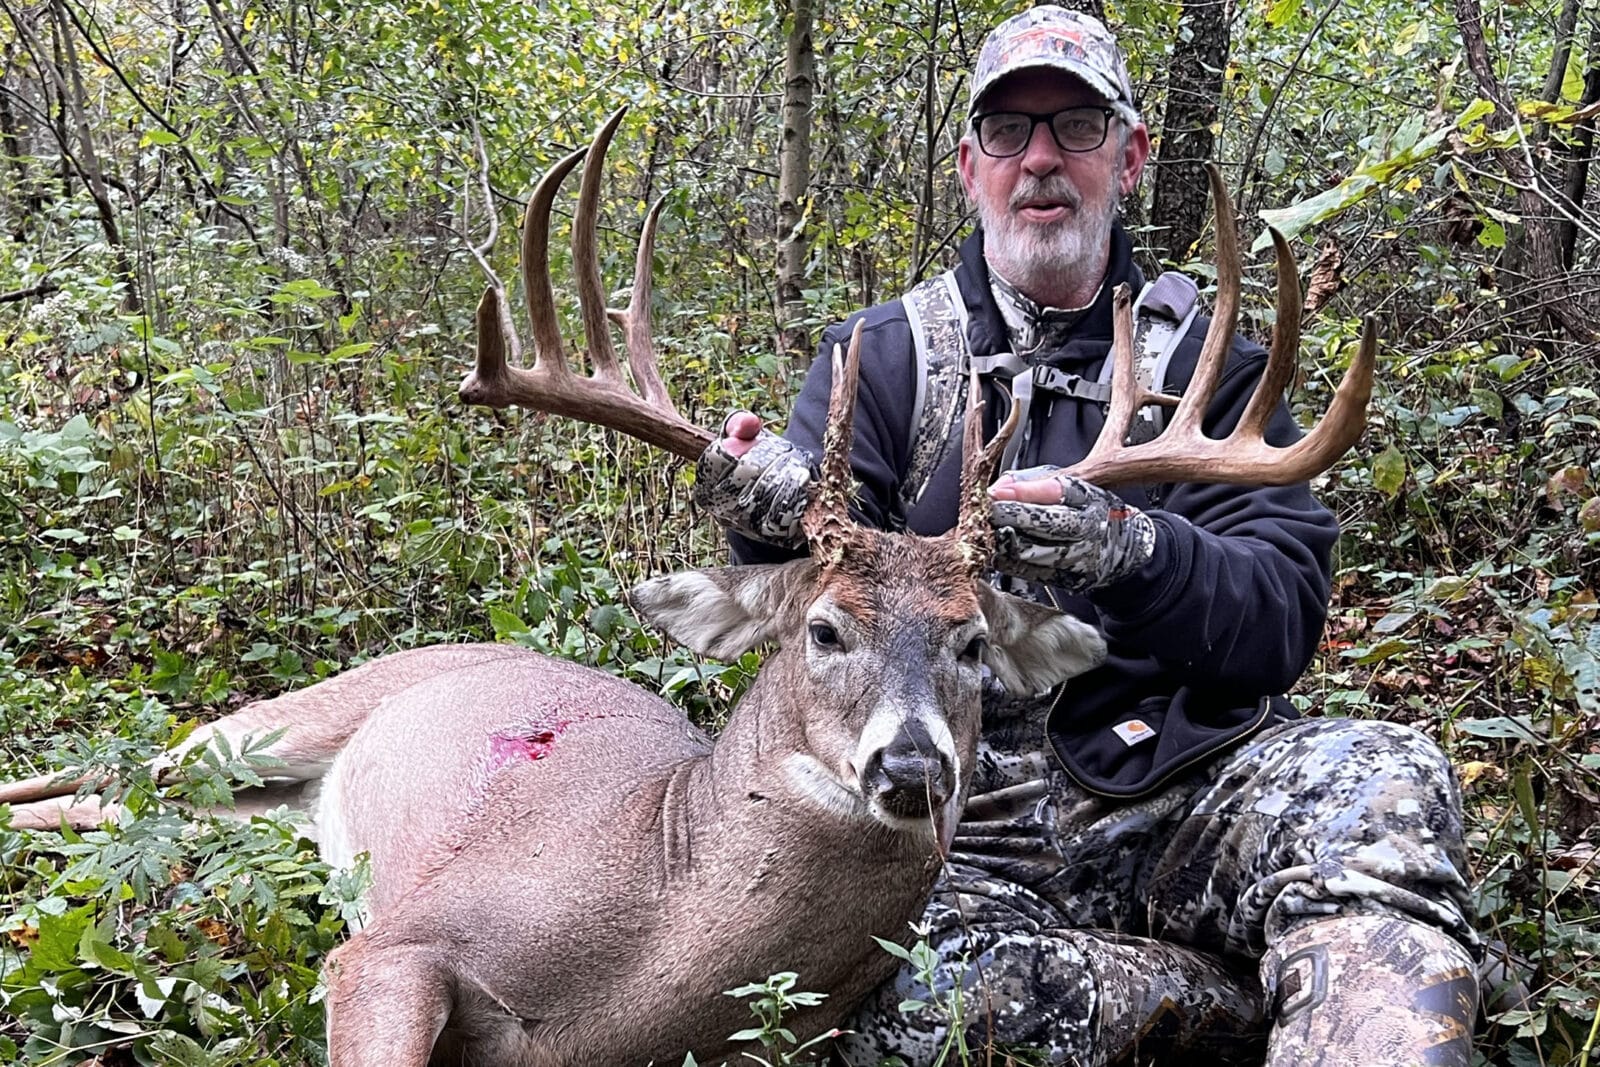 Ohio Giant Buck First